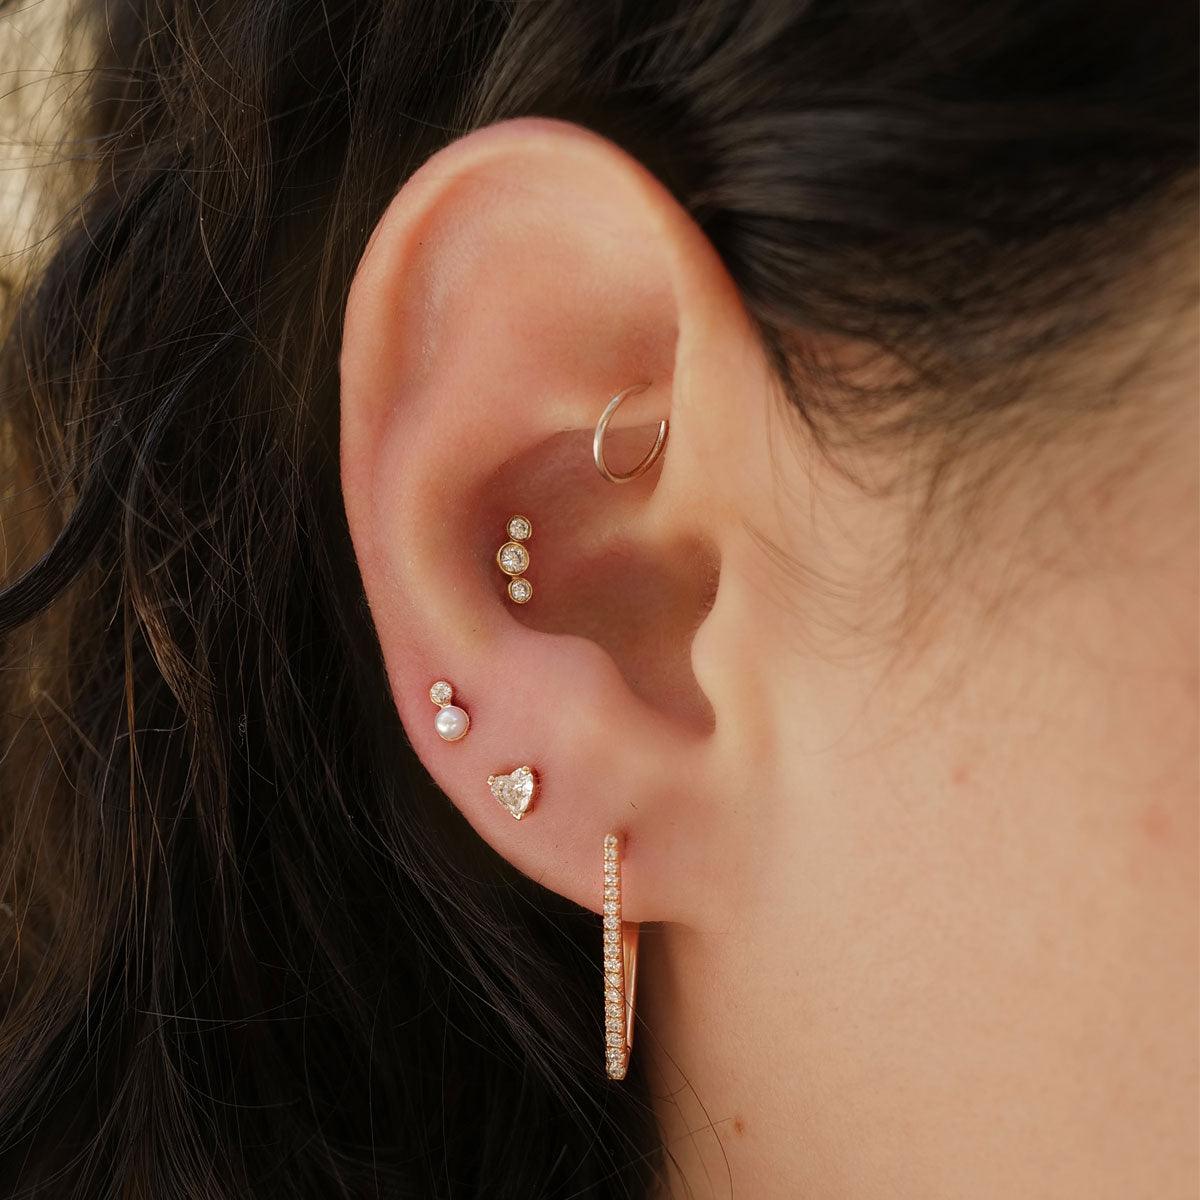 Sterling Silver Hoop Earrings 16 GAUGE, PAIR Cartilage Tragus Helix Eyebrow  Nose Ring Catchless Seamless Little Sleeper - Etsy | Ear piercings, Ear  cuff, Cartilage earrings